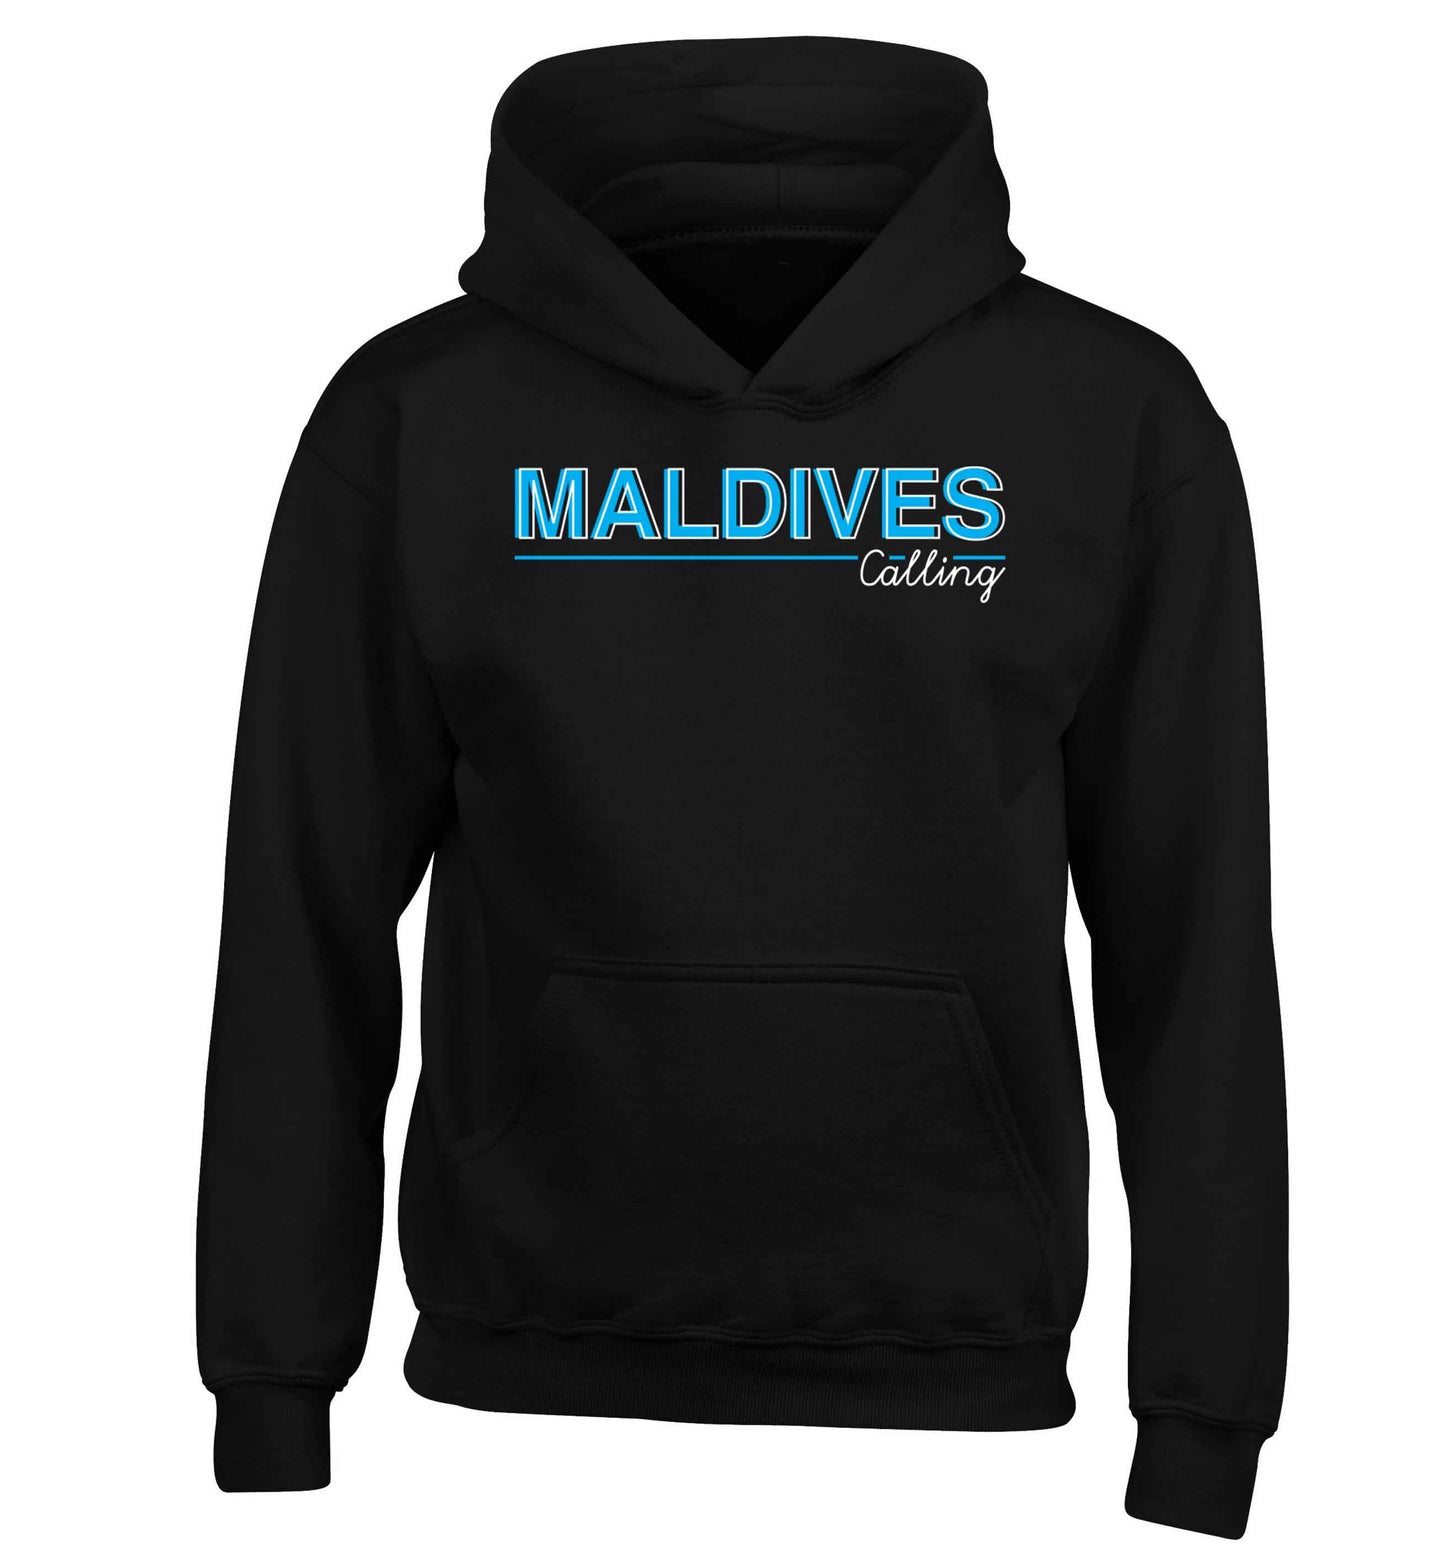 Maldives calling children's black hoodie 12-13 Years